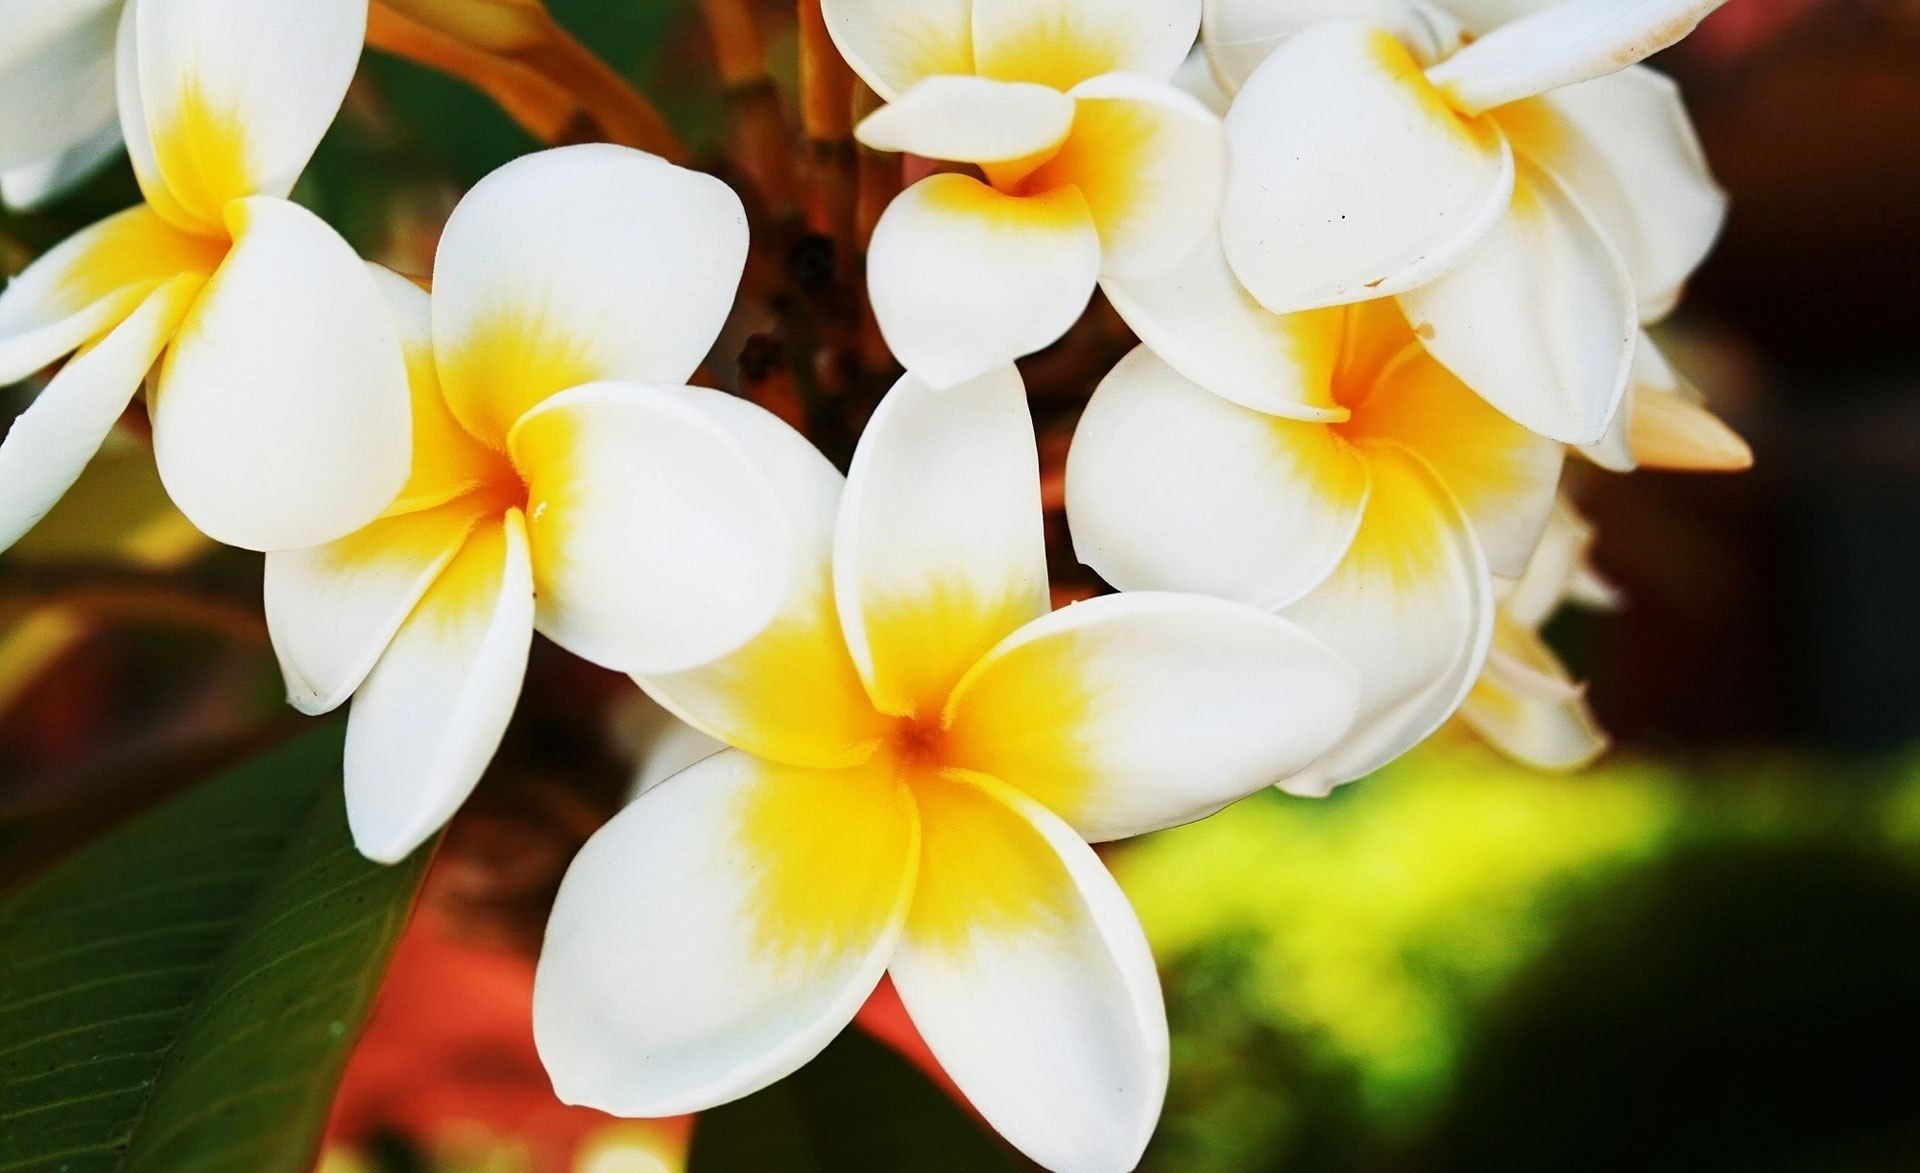 288288 descargar imagen tierra/naturaleza, frangipani, flor, flores: fondos de pantalla y protectores de pantalla gratis